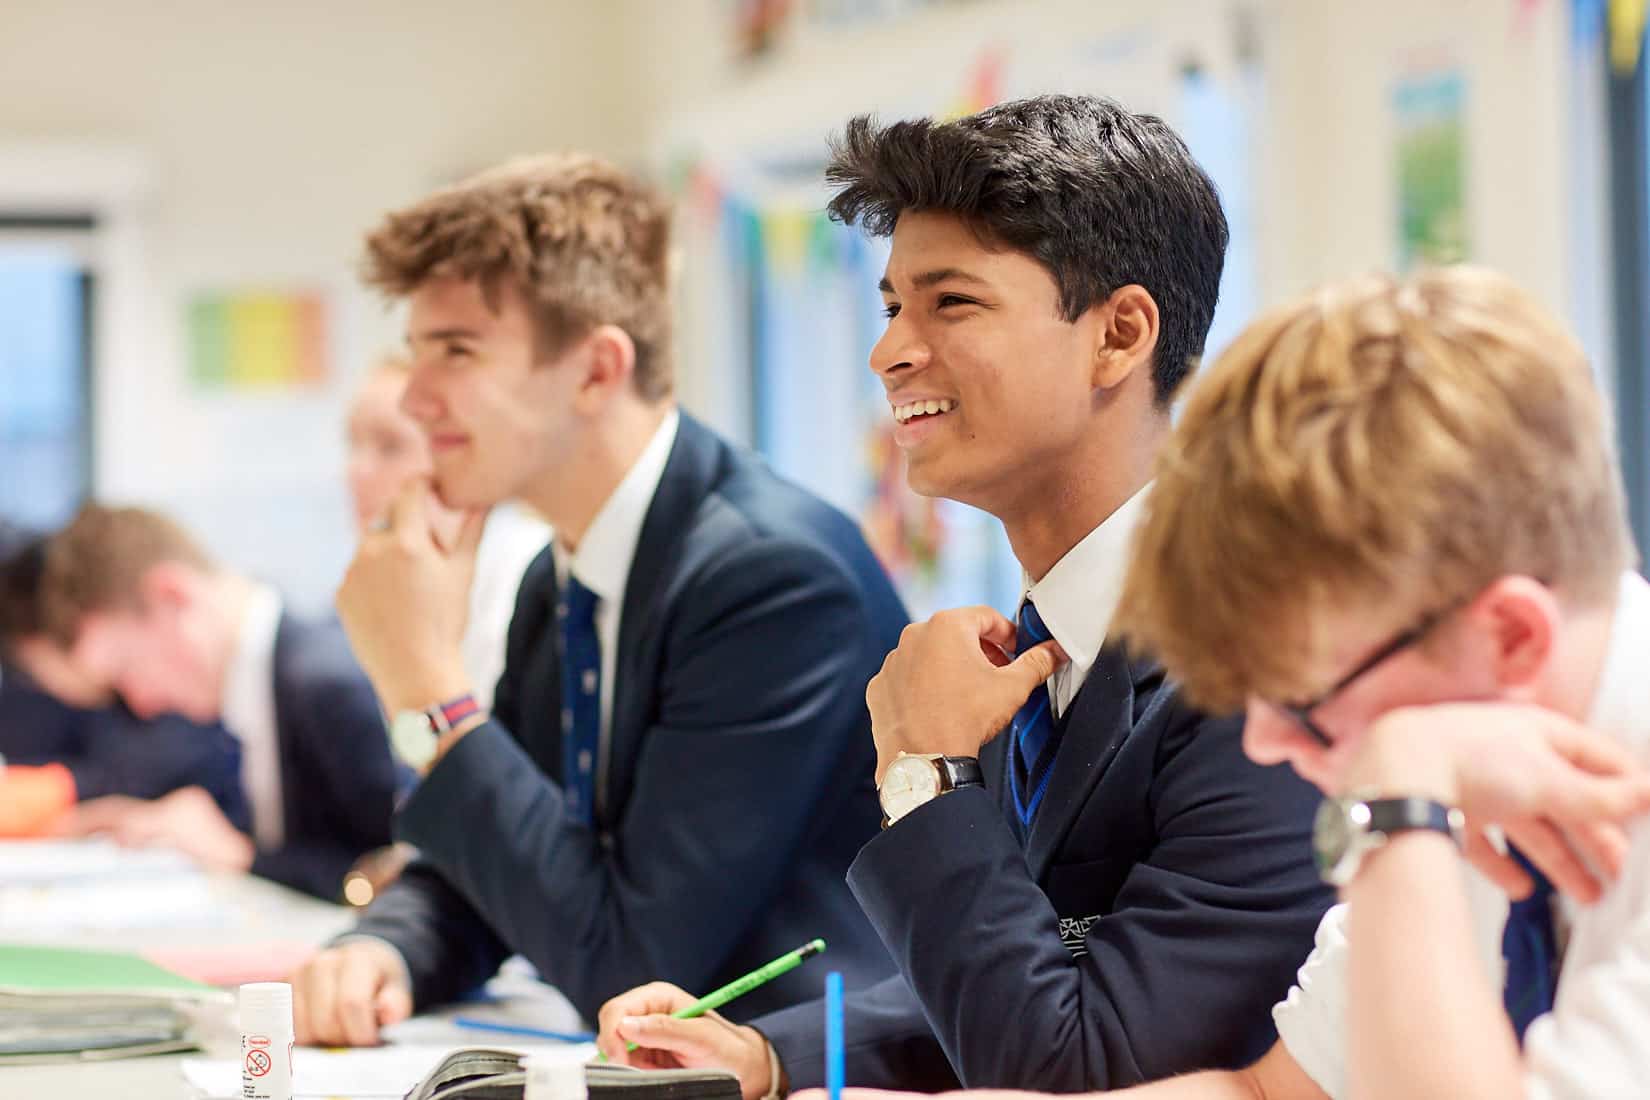 Christ College Brecon: Learn English at a great British boarding school